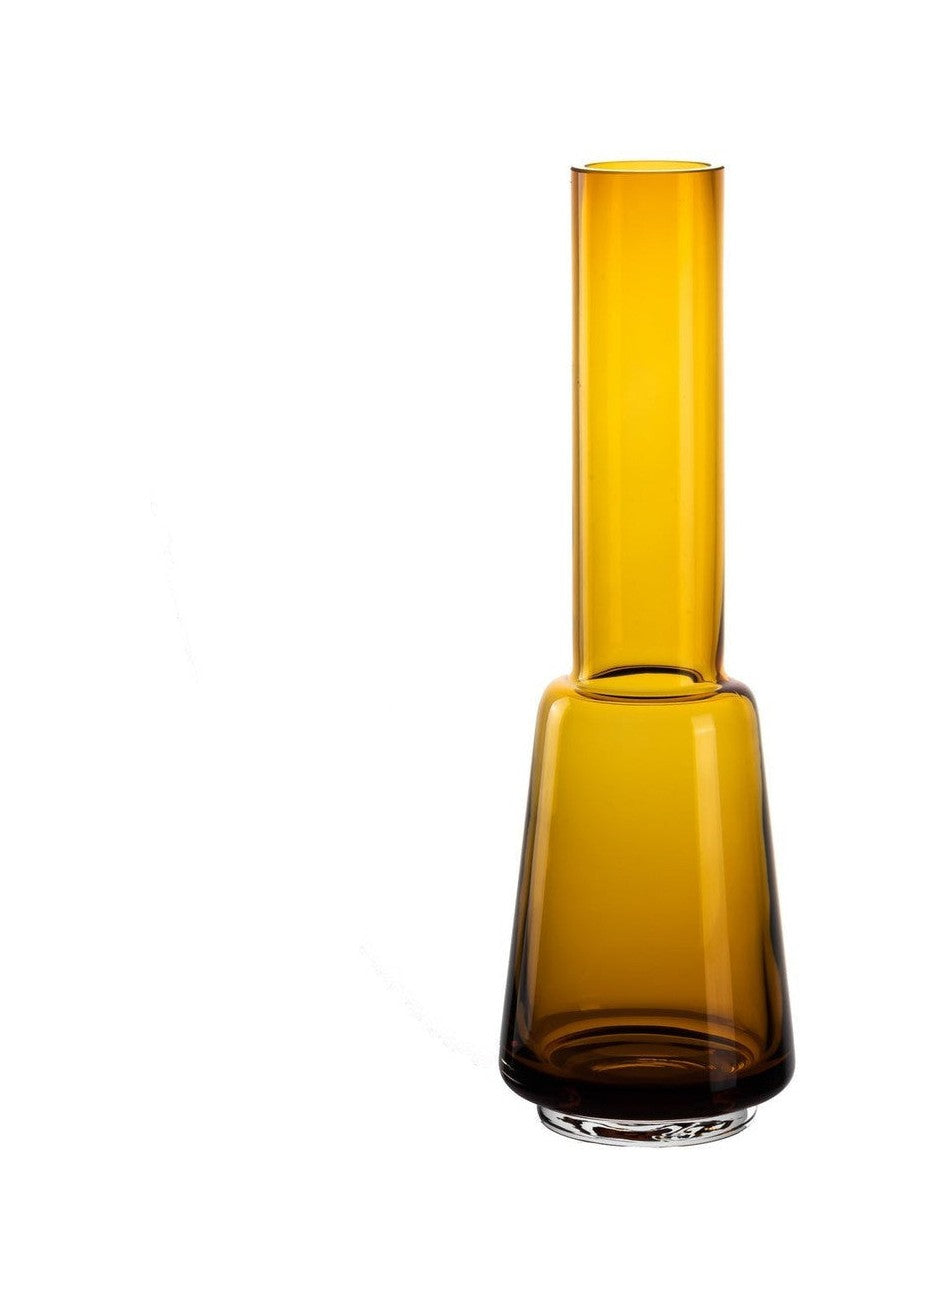 Retro style large modern classy design vase, amber color, TYLER14AM